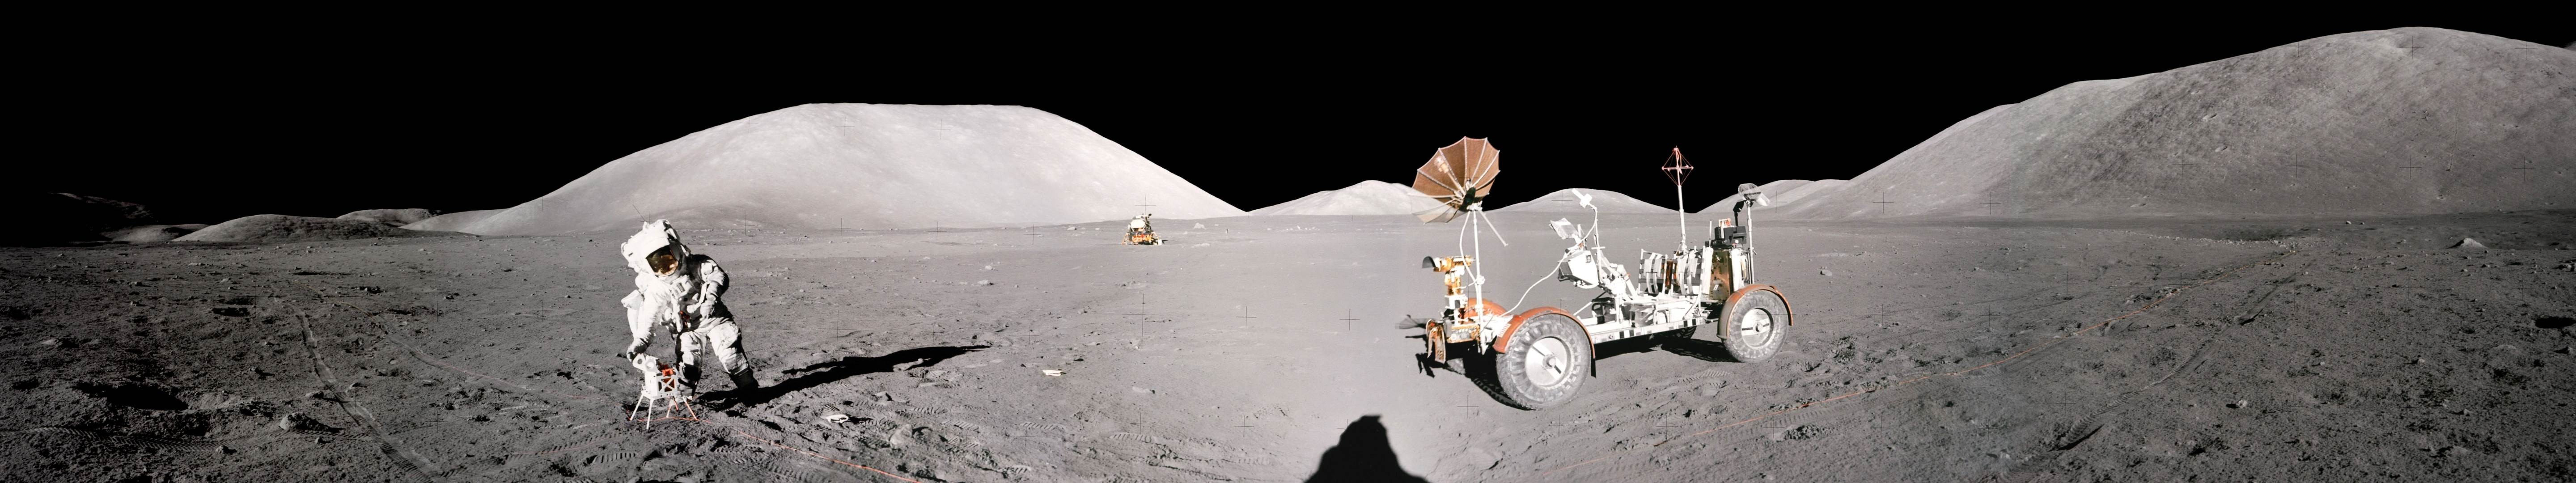 General 5760x1080 Moon space vehicle astronaut NASA Apollo program